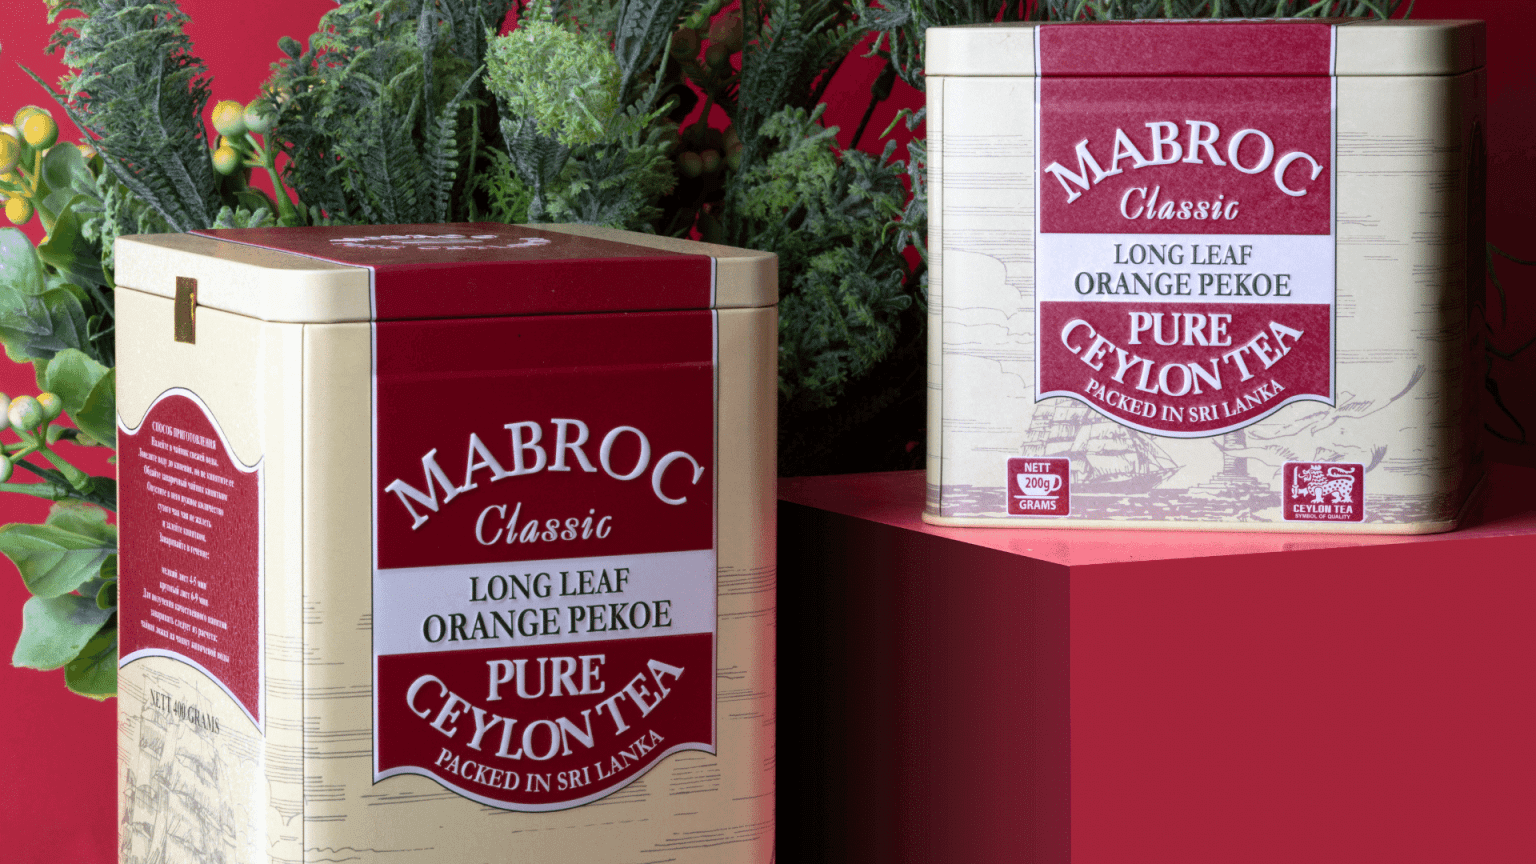 Mabroc Classic - Pure Ceylon Tea - Long Leaf Orange Pekoe